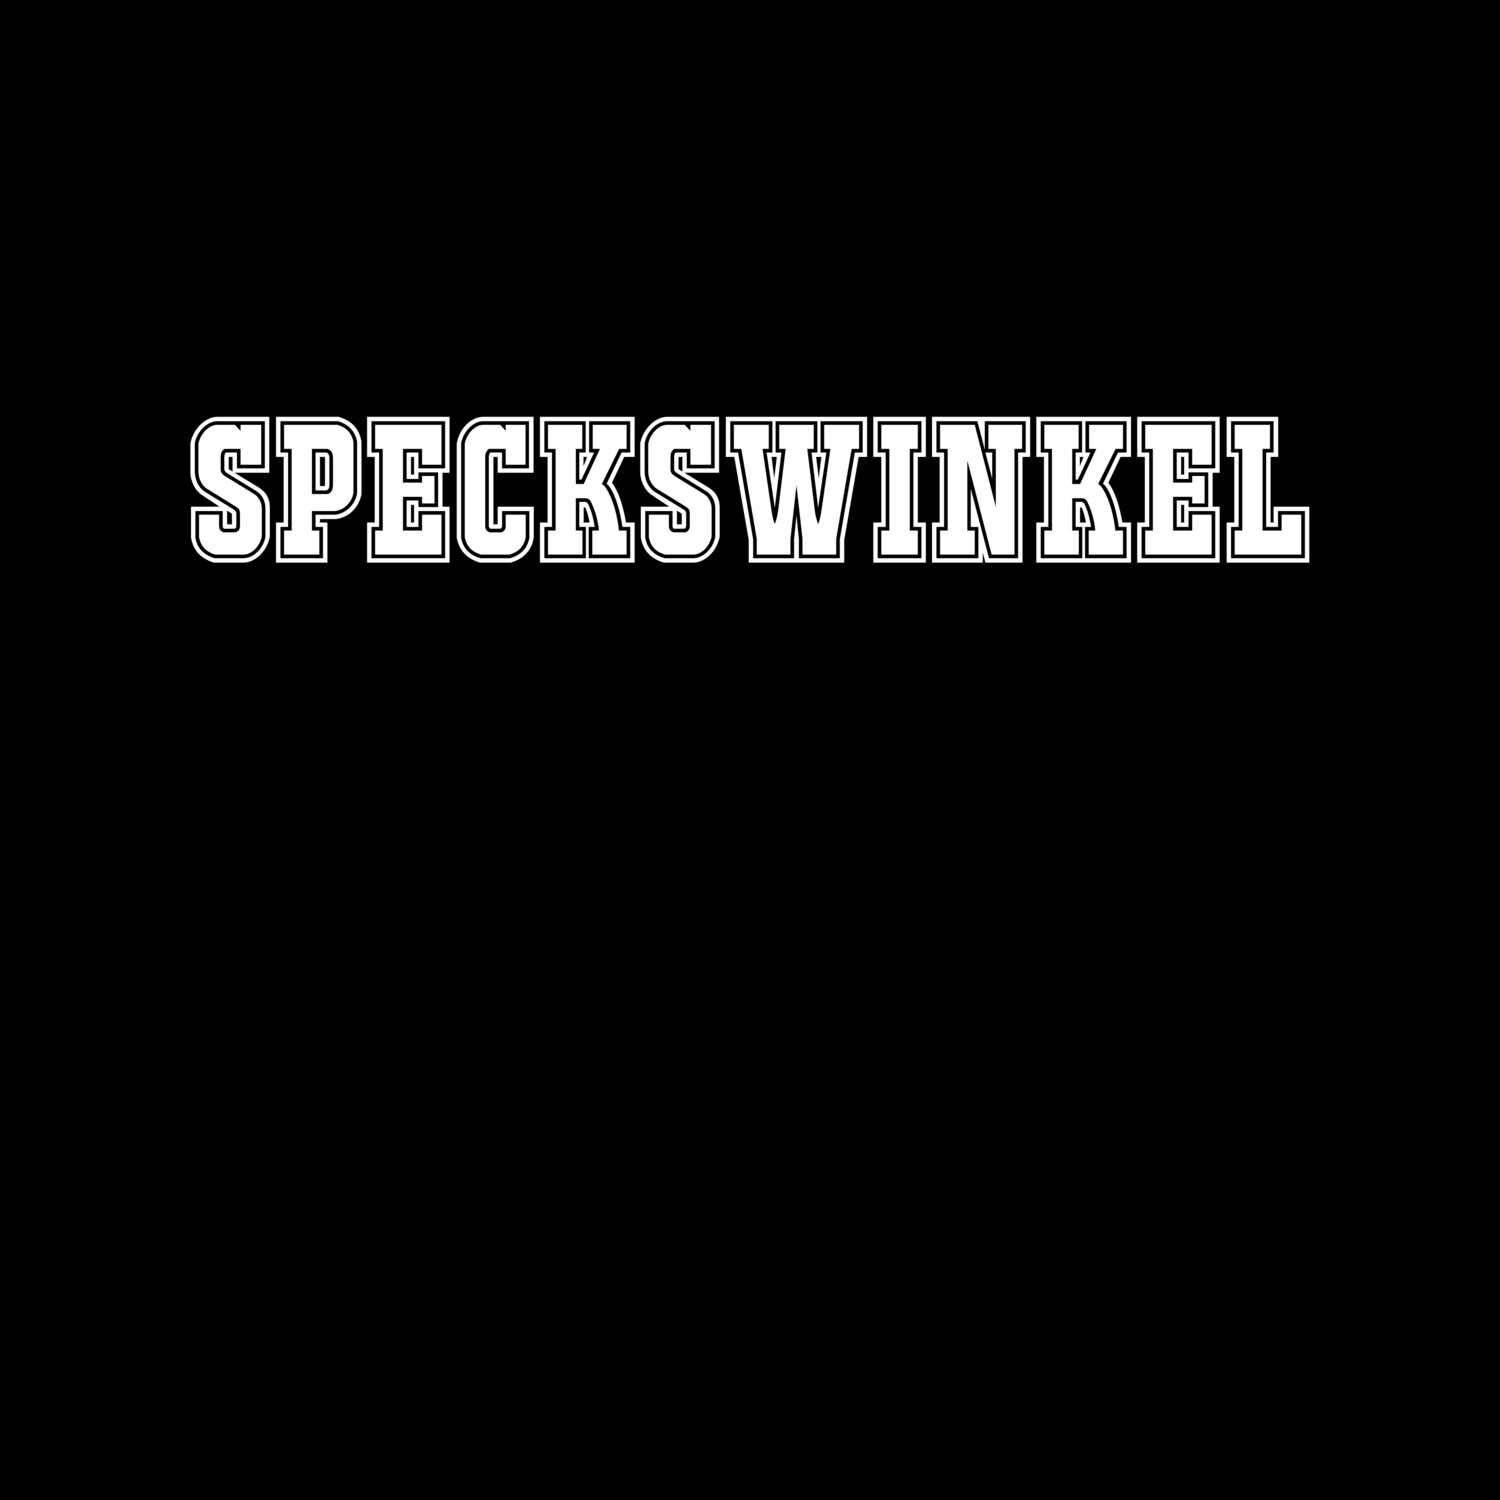 Speckswinkel T-Shirt »Classic«